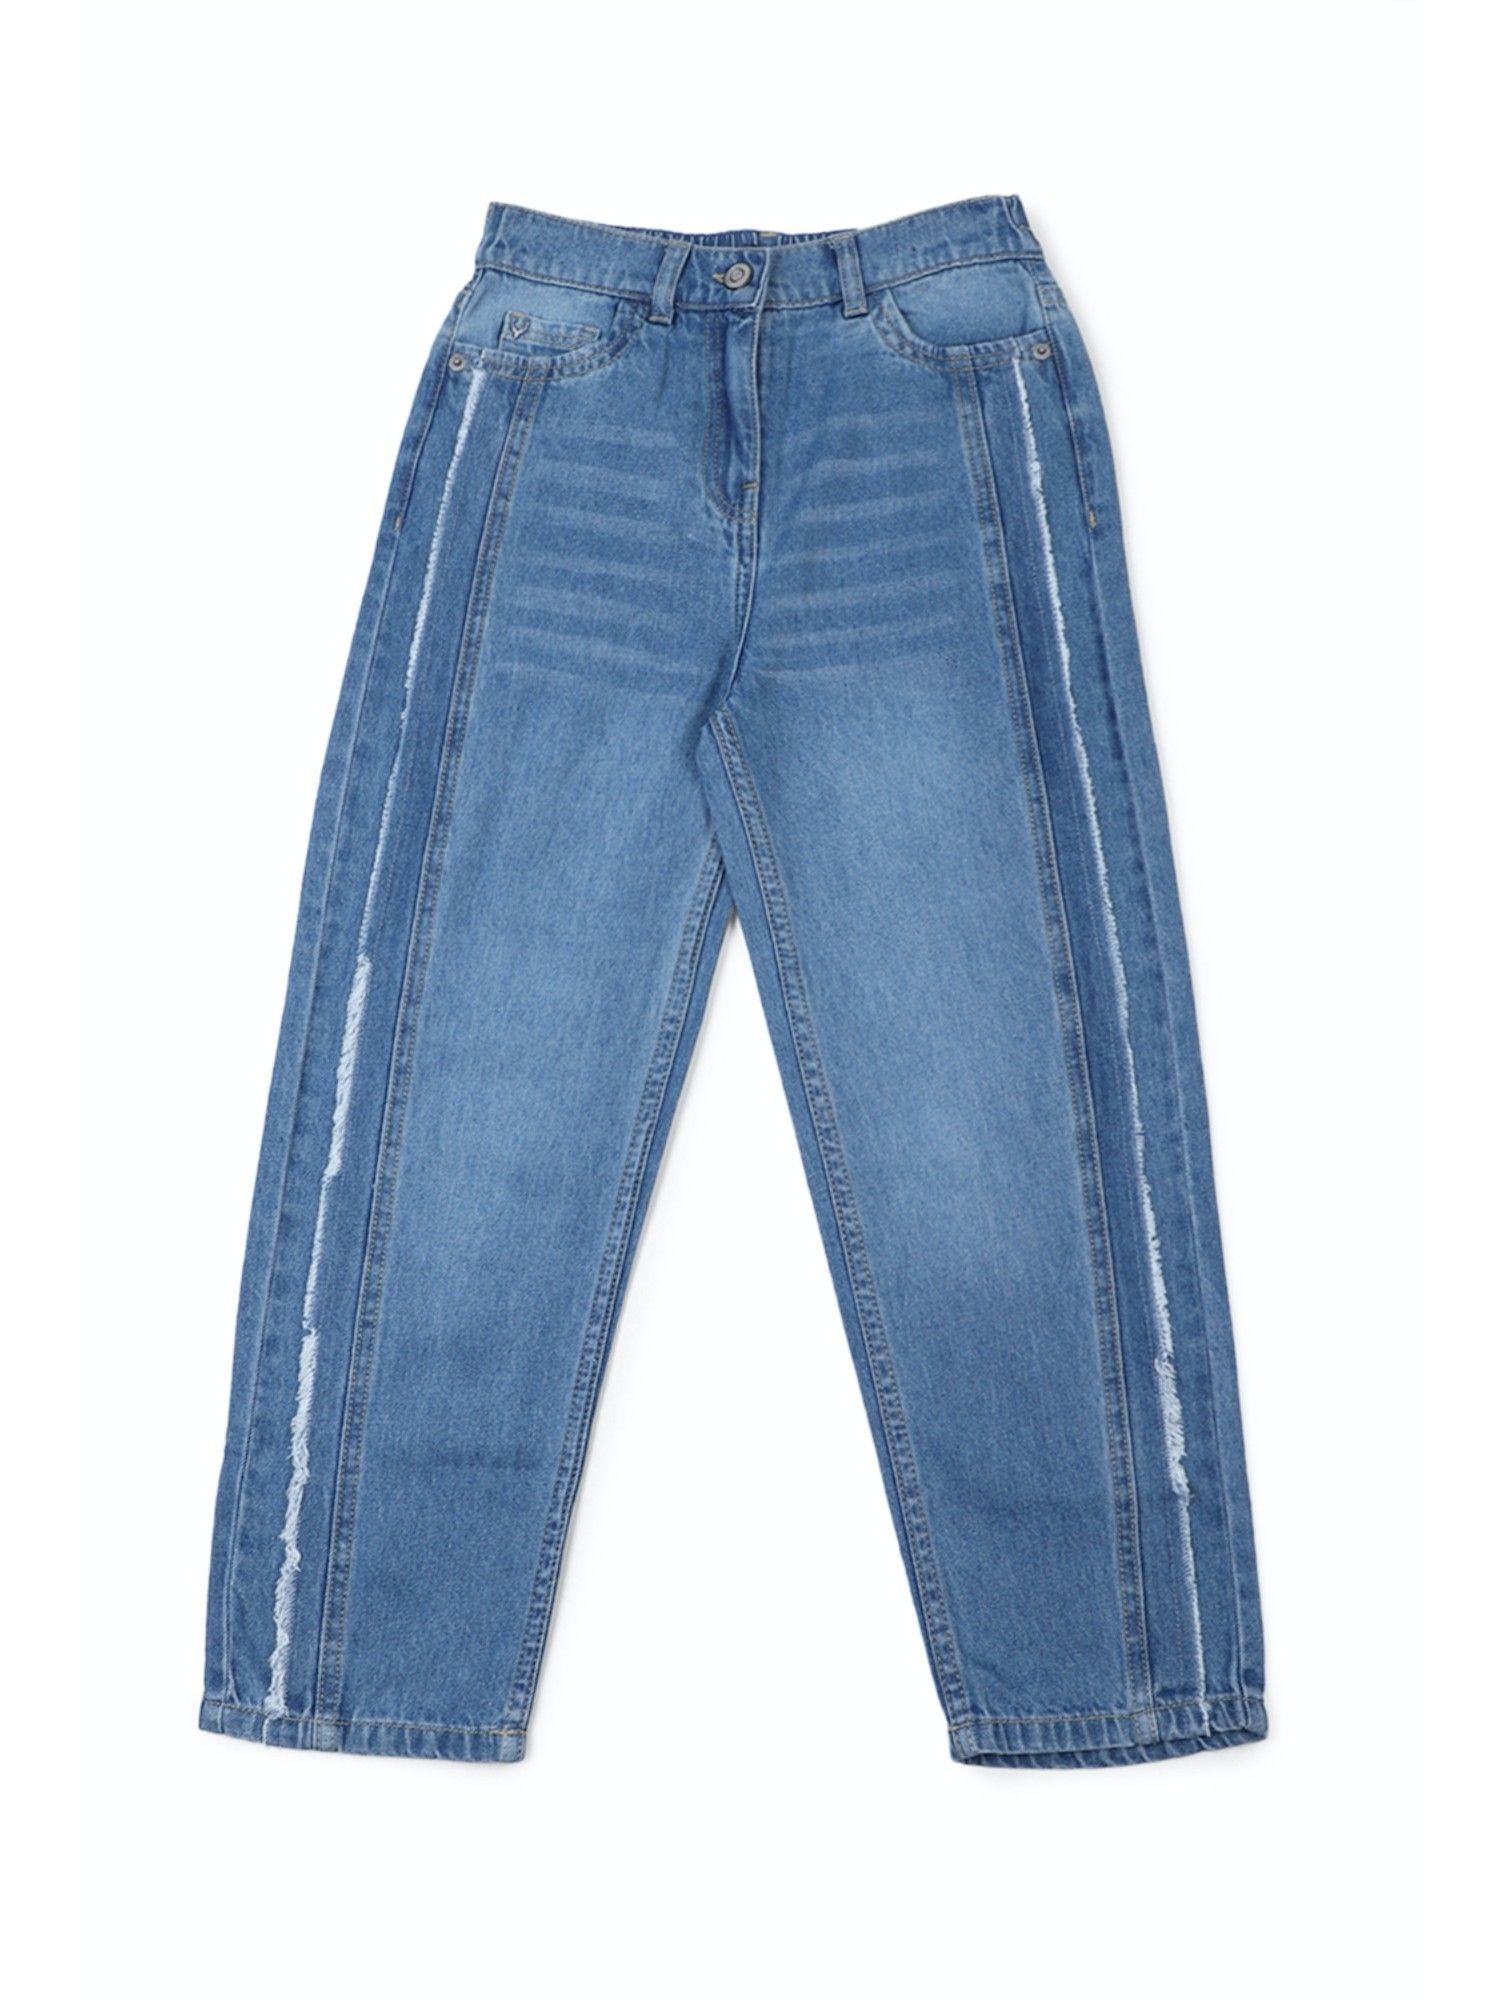 girls blue plain jeans